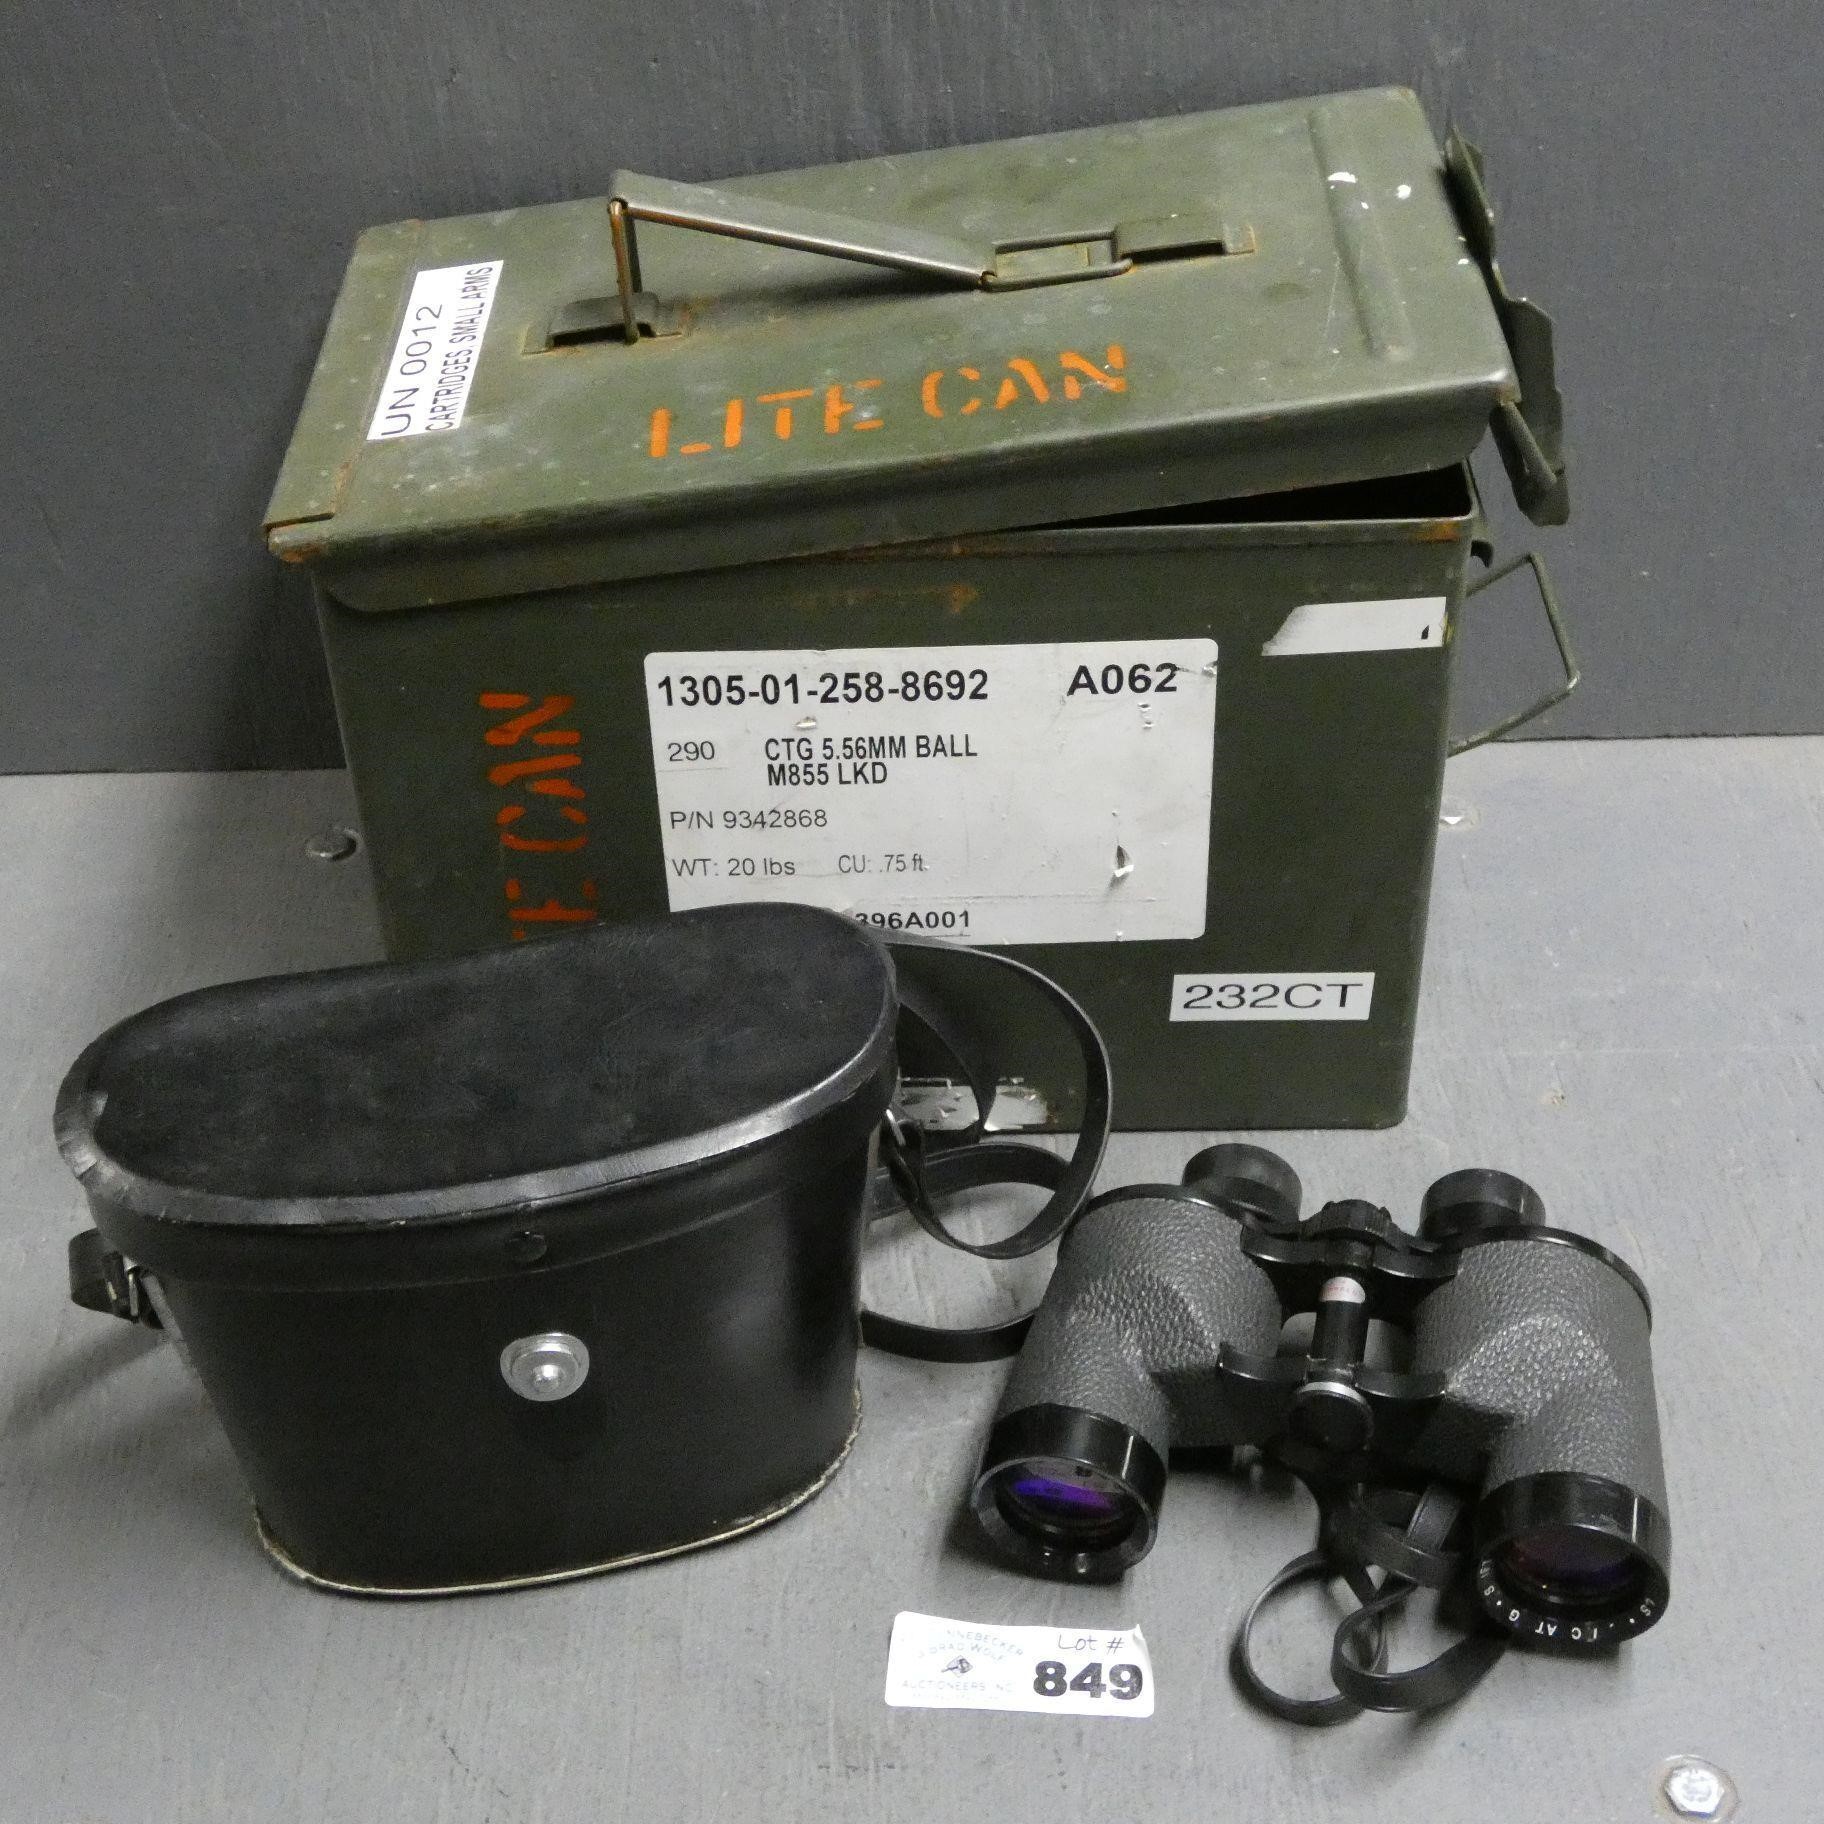 Metal Ammunition Box